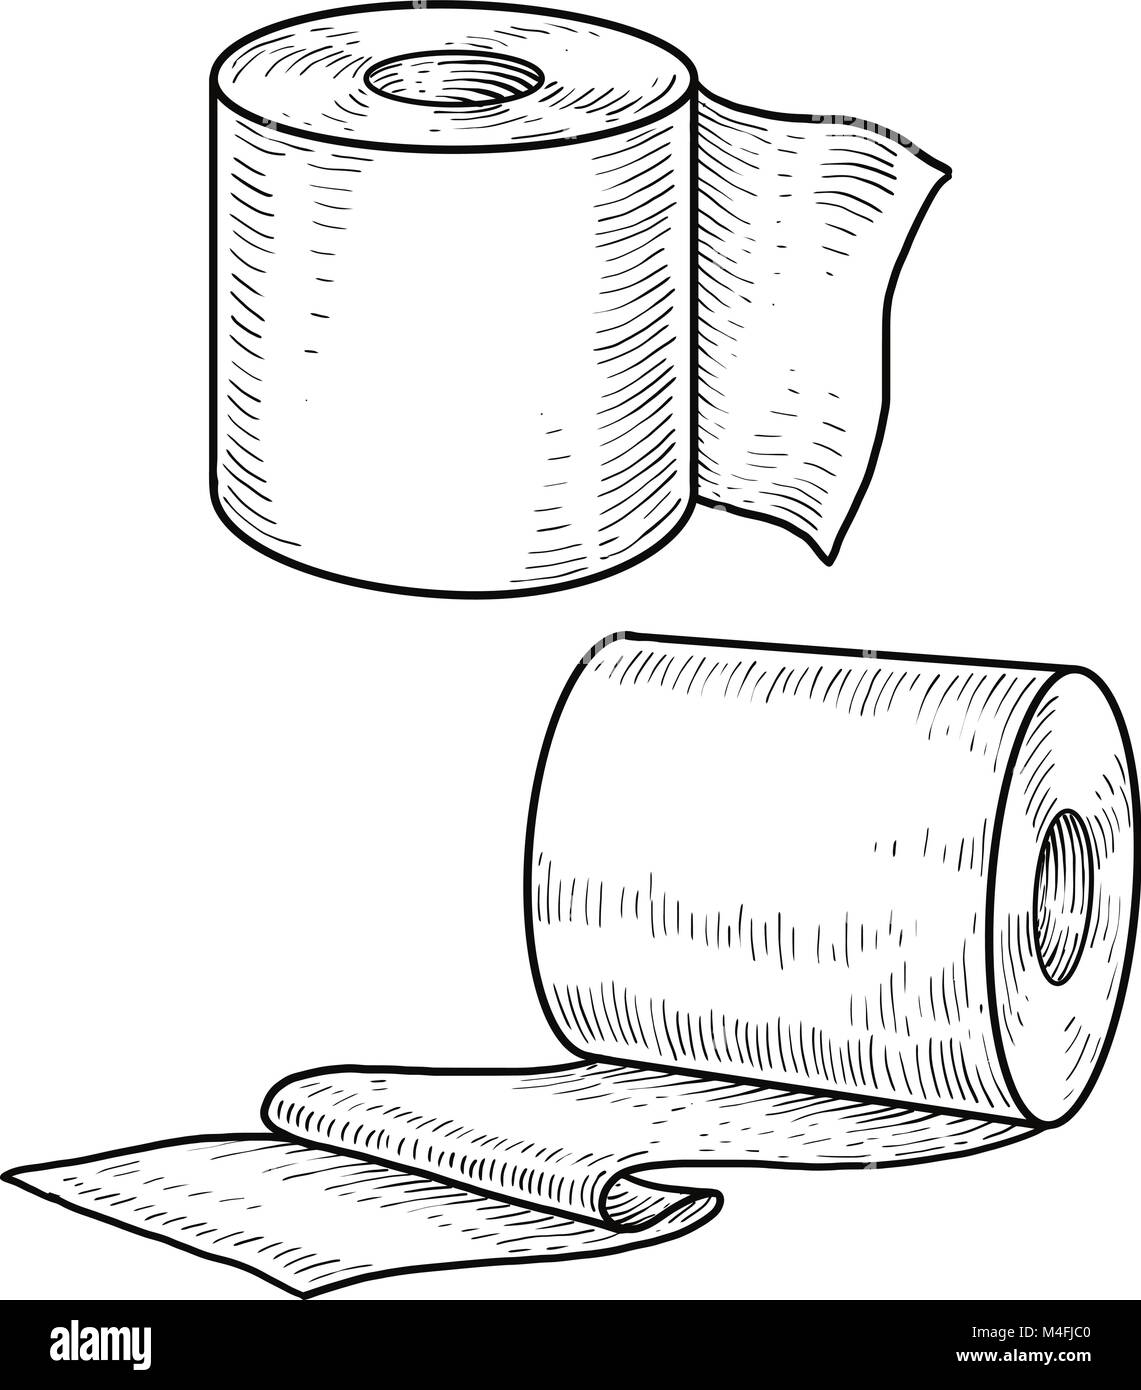 Papier toilette illustration, dessin, gravure, encre, dessin au trait, vector Illustration de Vecteur